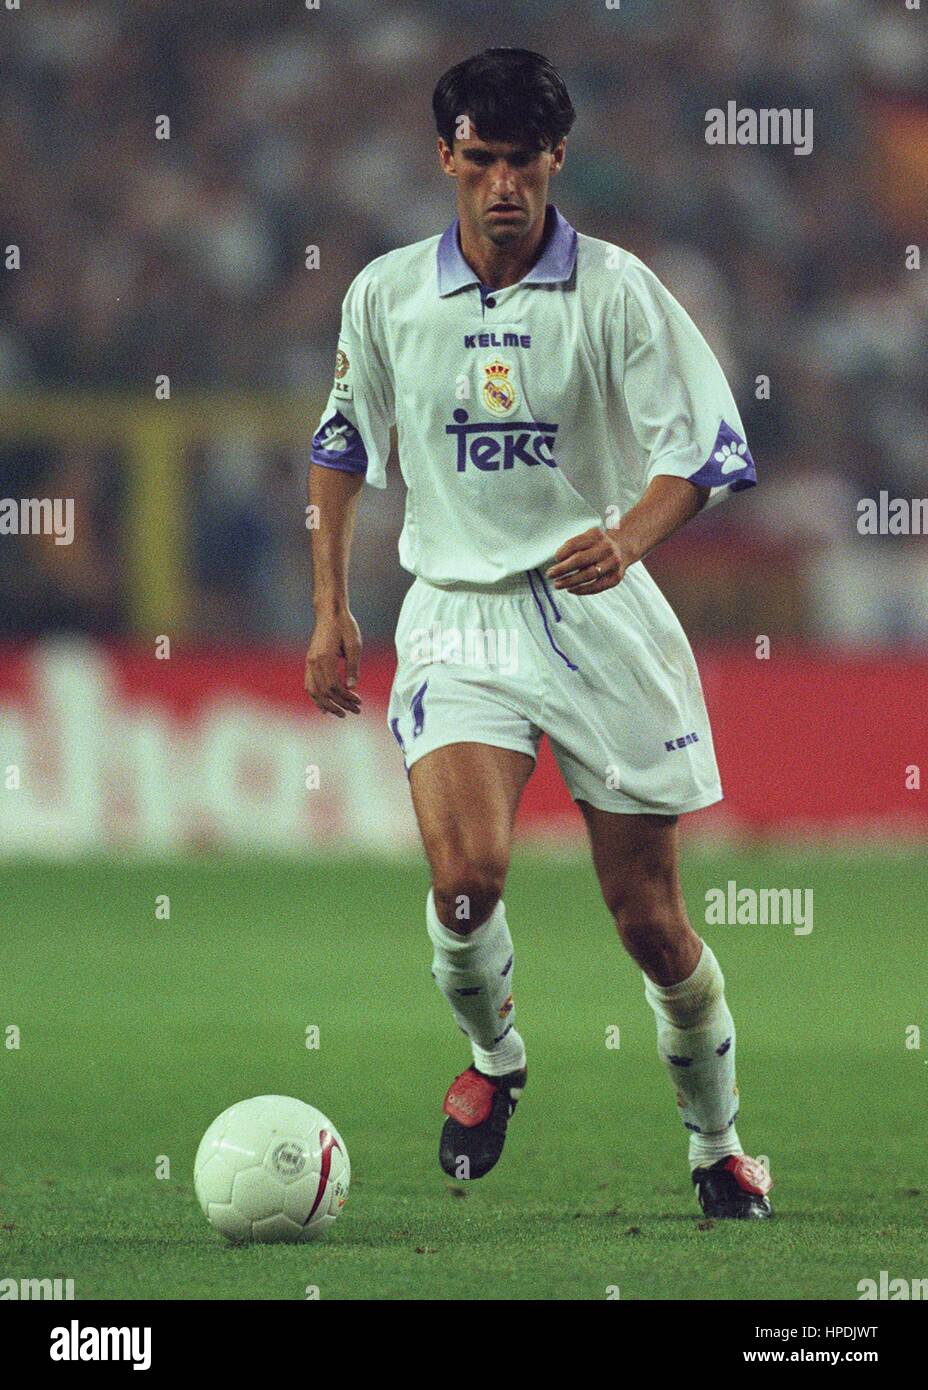 PANUCCI REAL MADRID FC 02 September 1997 Stock Photo - Alamy